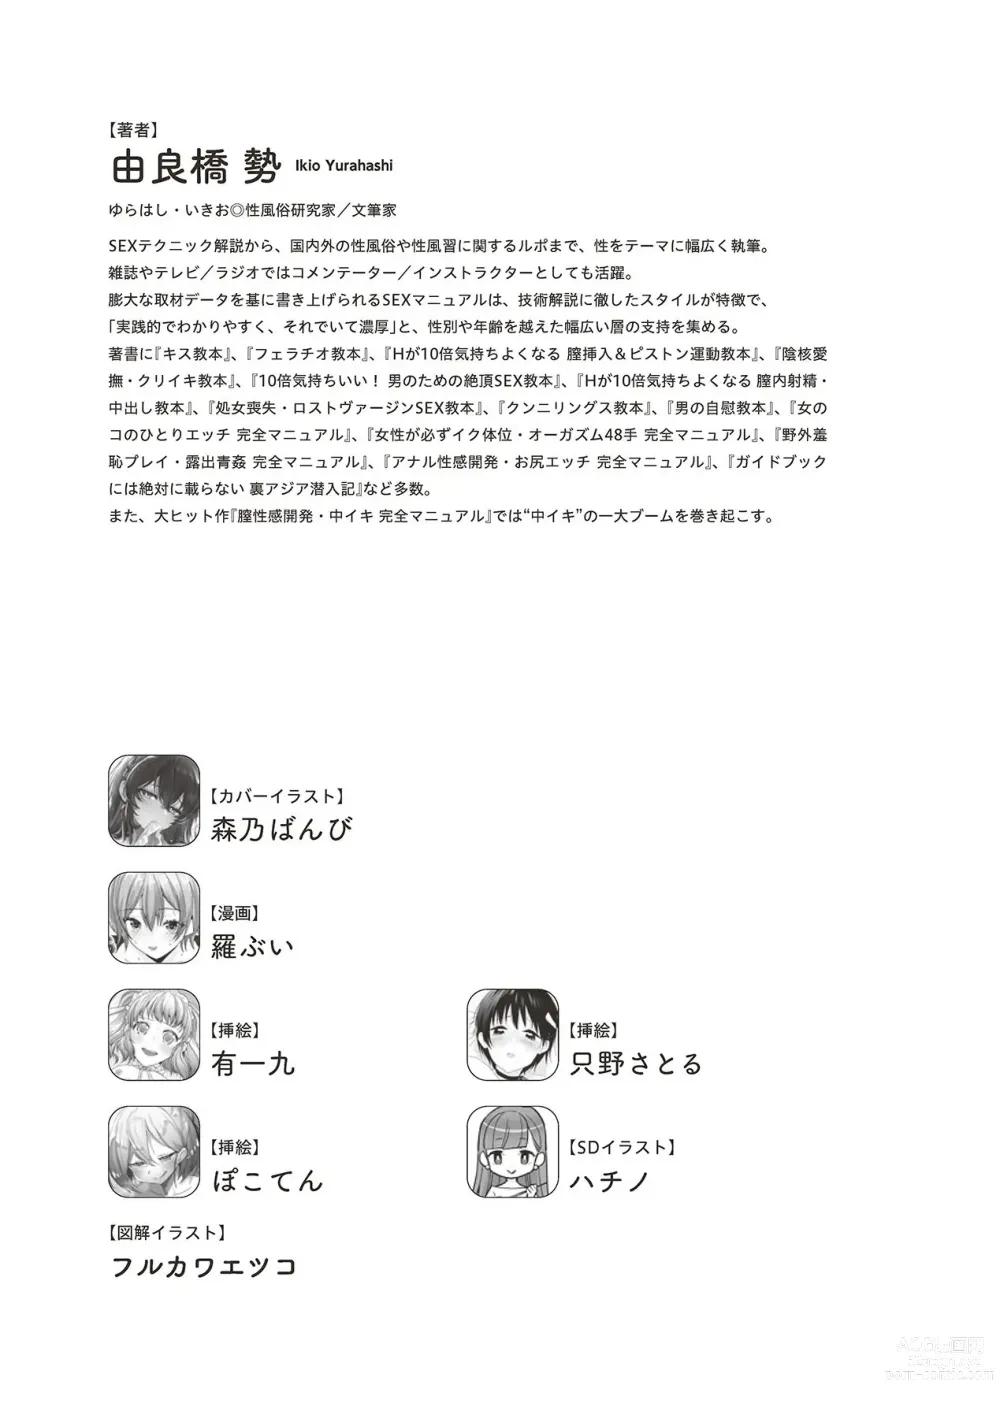 Page 145 of manga Otoko no Jii Onanie Kanzen Manual Illustration Han...... Onanie Play